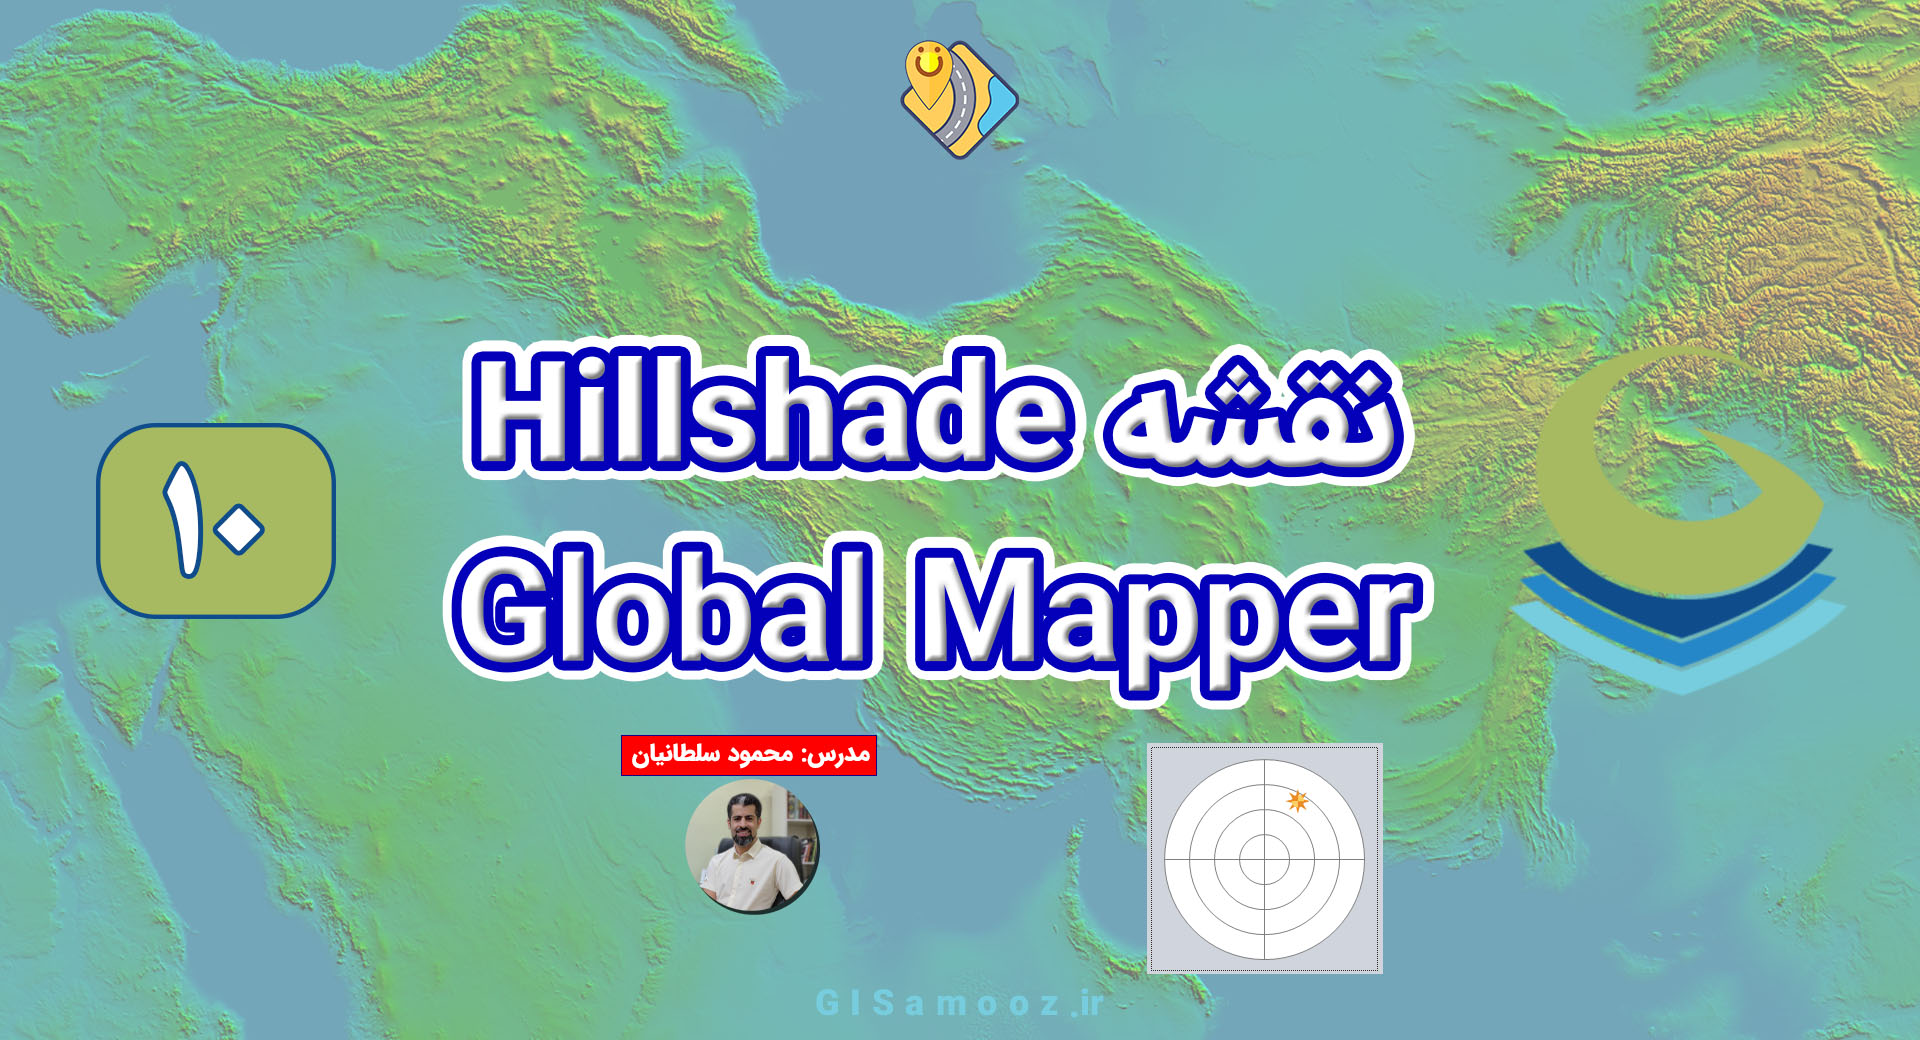 کاربرد نقشه Hillshade در گلوبال مپر پرو